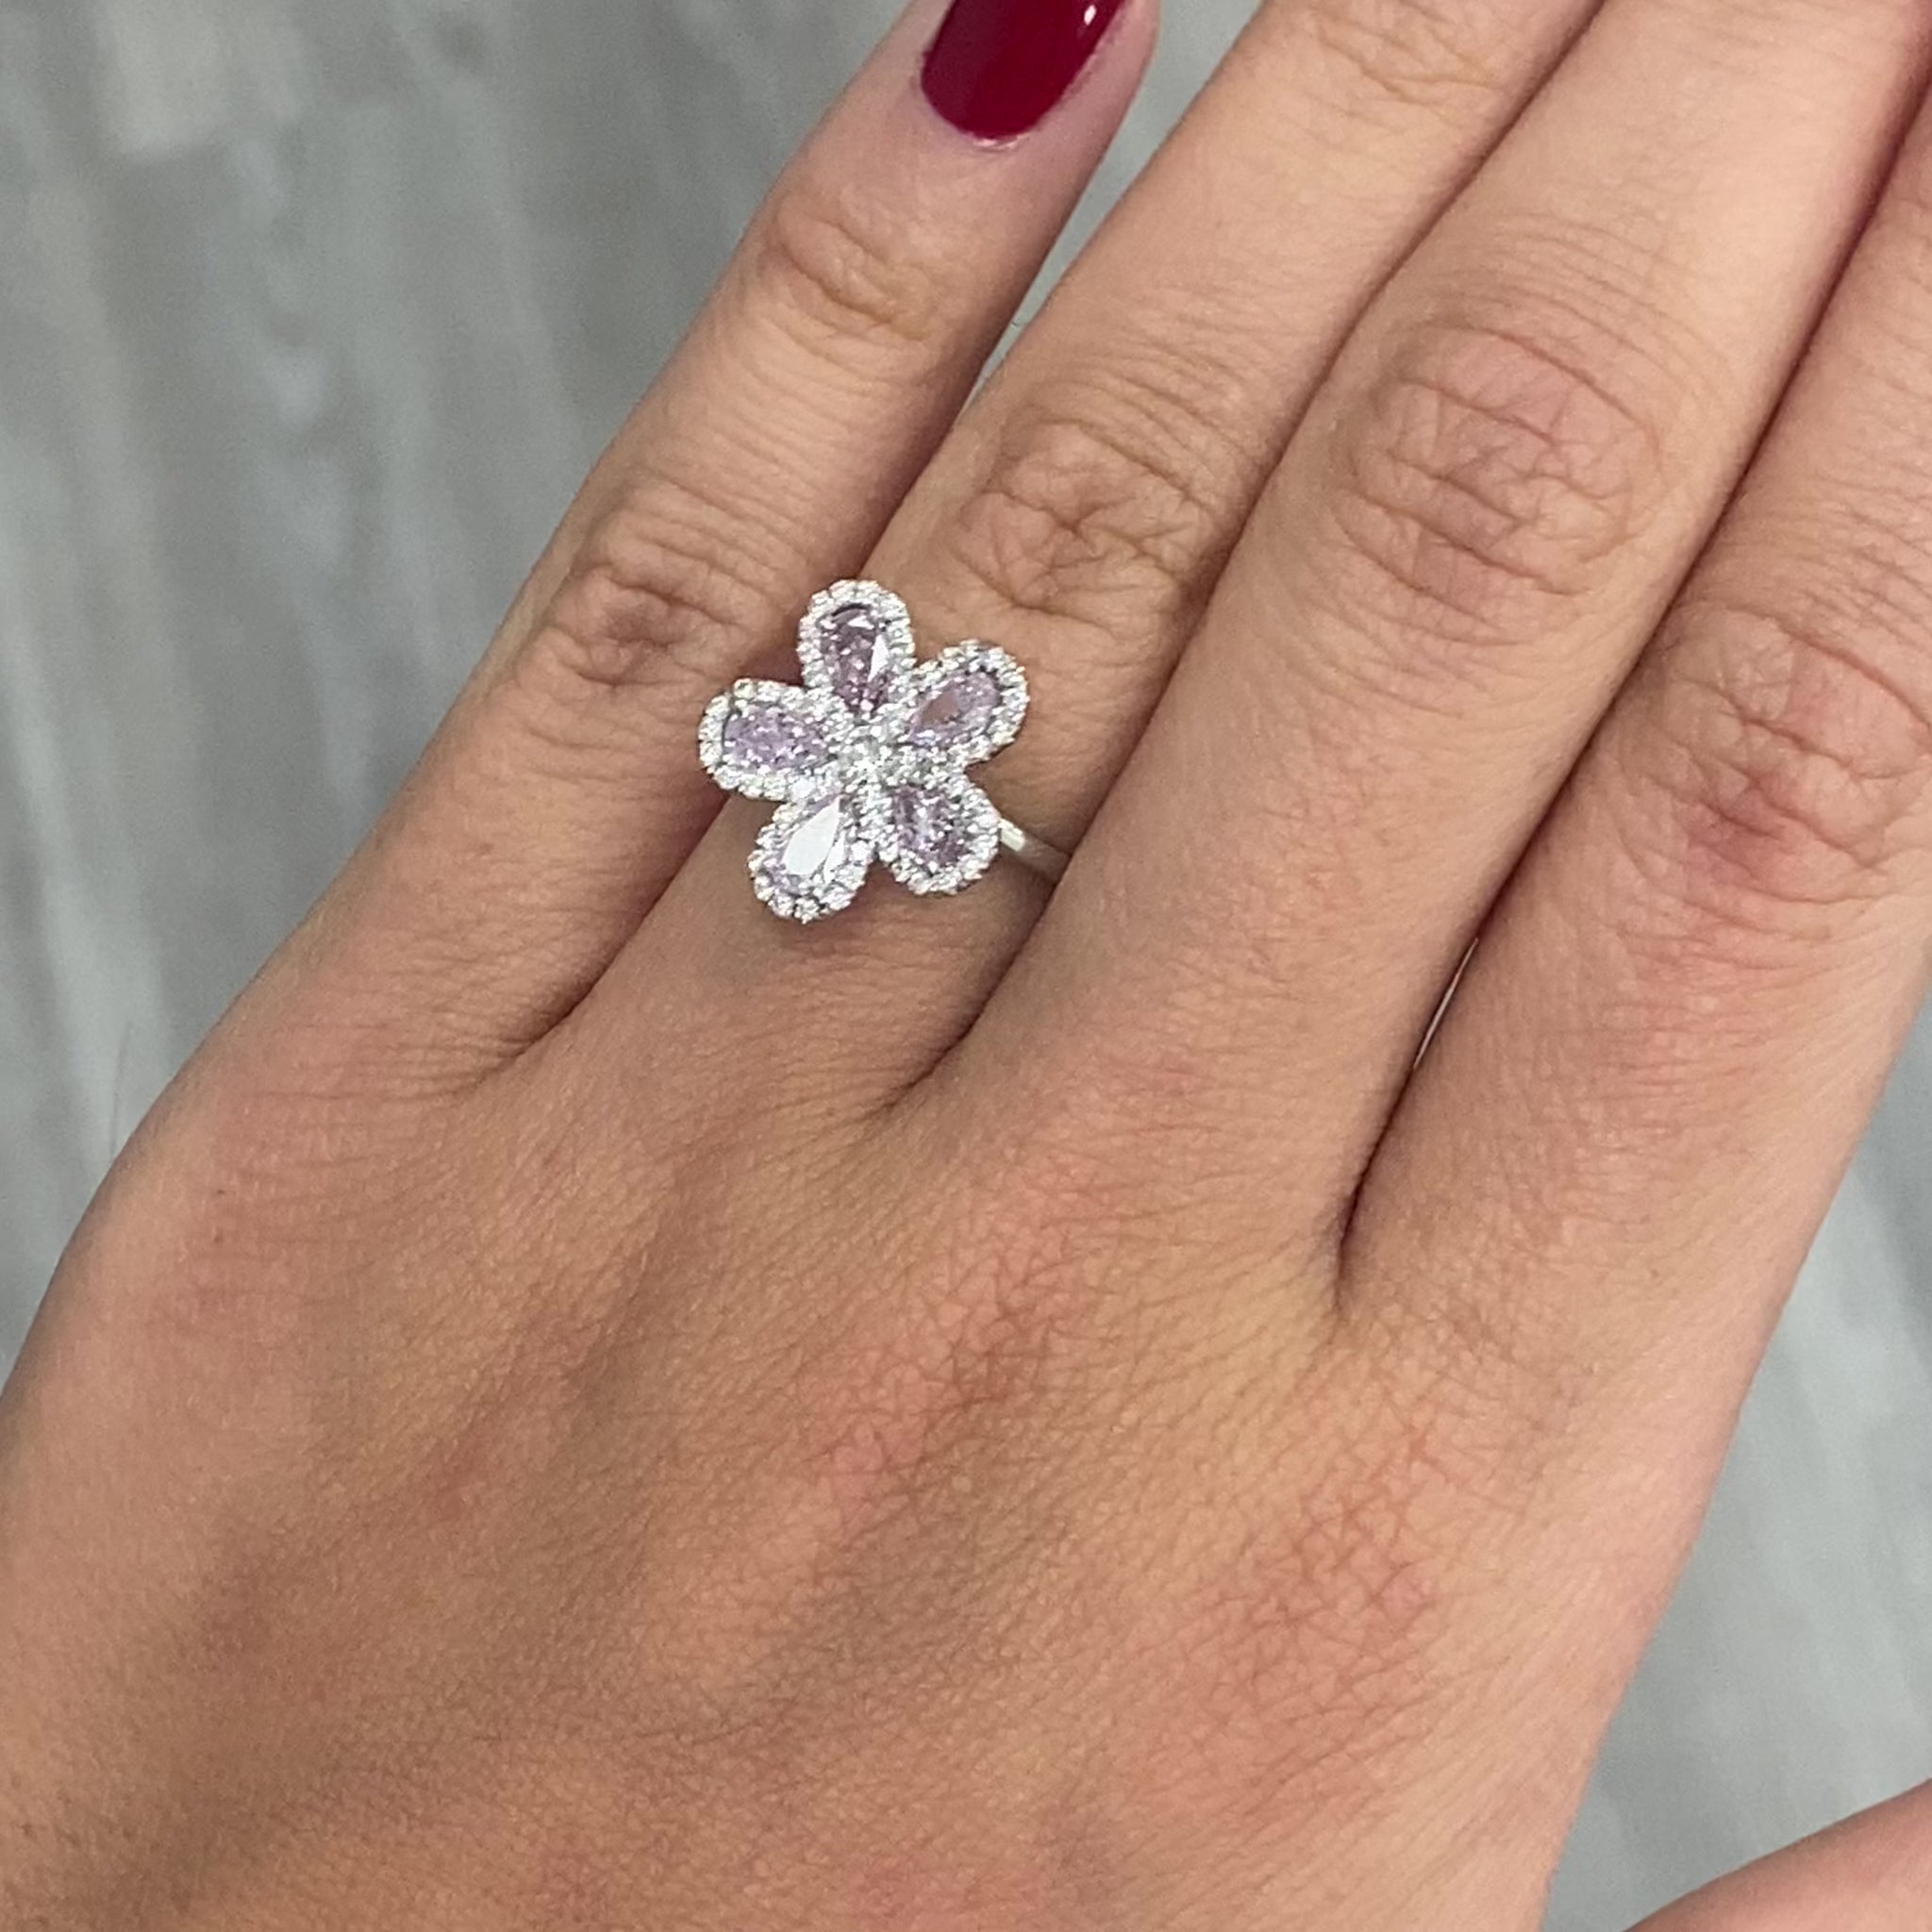 pink diamond ring. pink diamond flower. pink diamond fashion ring. floral diamond jewelry, unique jewelry inspiration